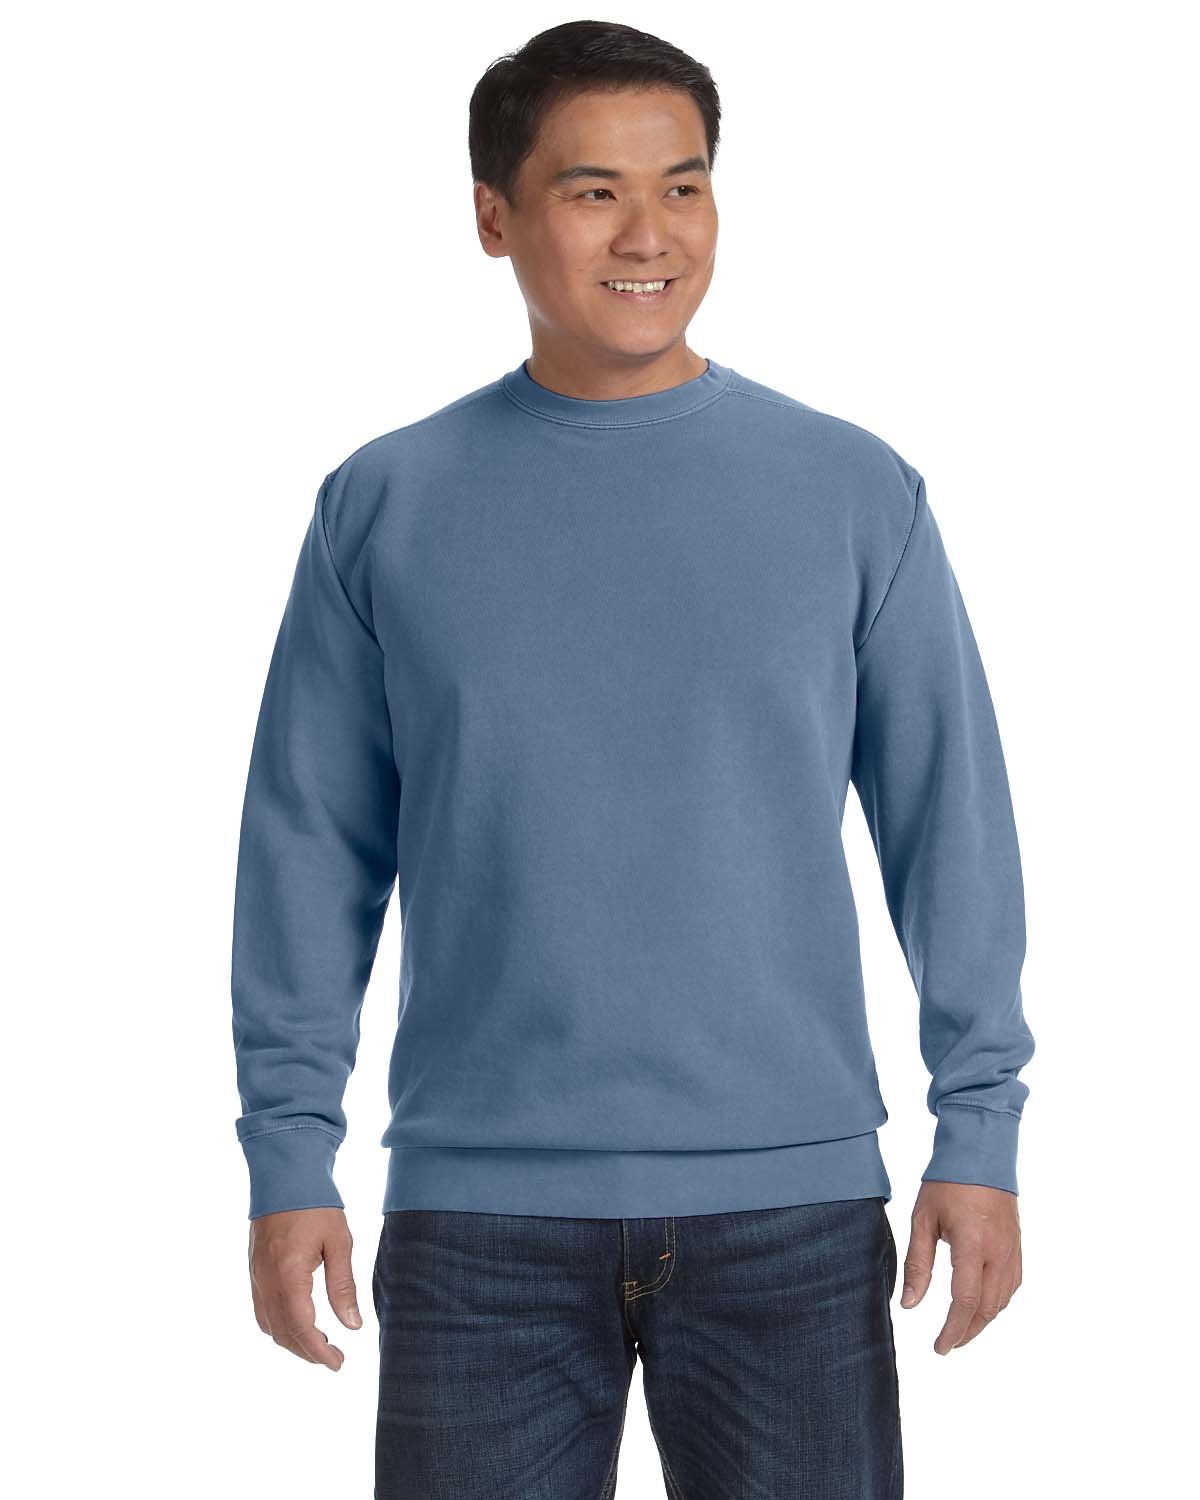 Adult Crewneck Sweatshirt-Comfort Colors